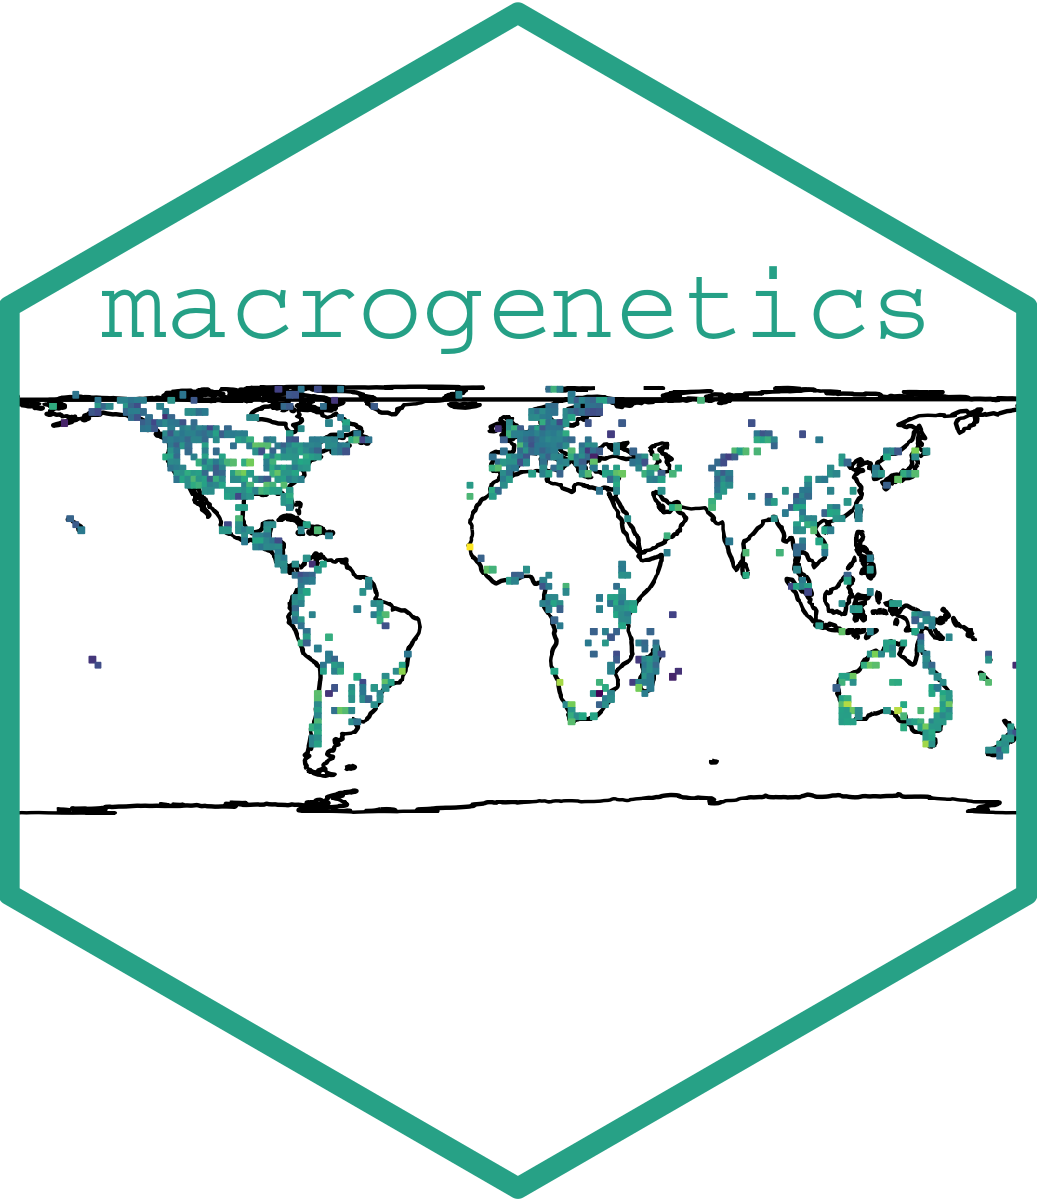 macrogenetics logo